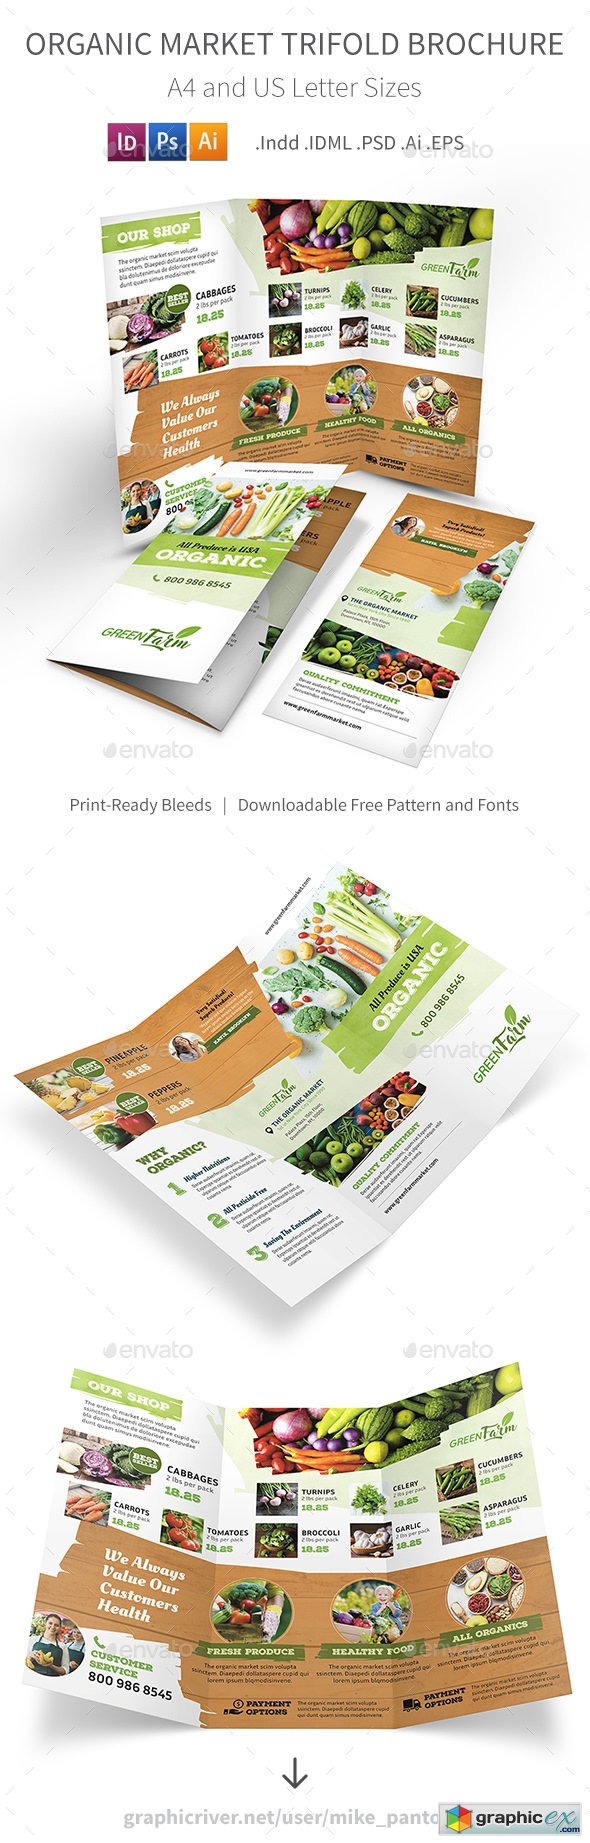 Organic Market Trifold Brochure 3